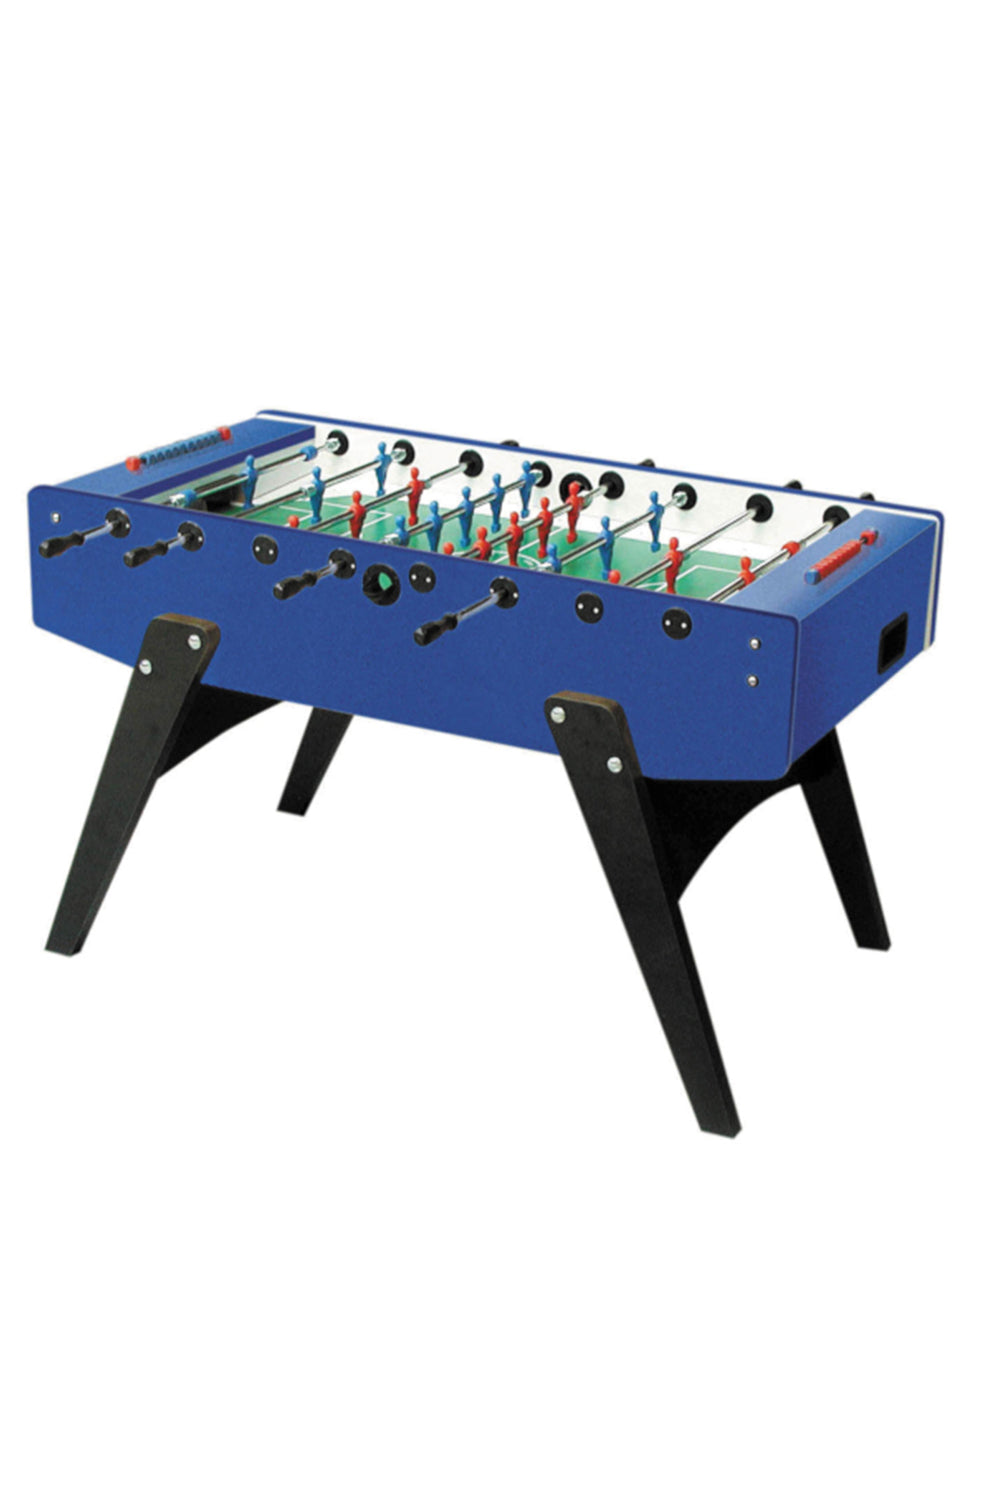 Garlando G2000 Soccer Table - Blue